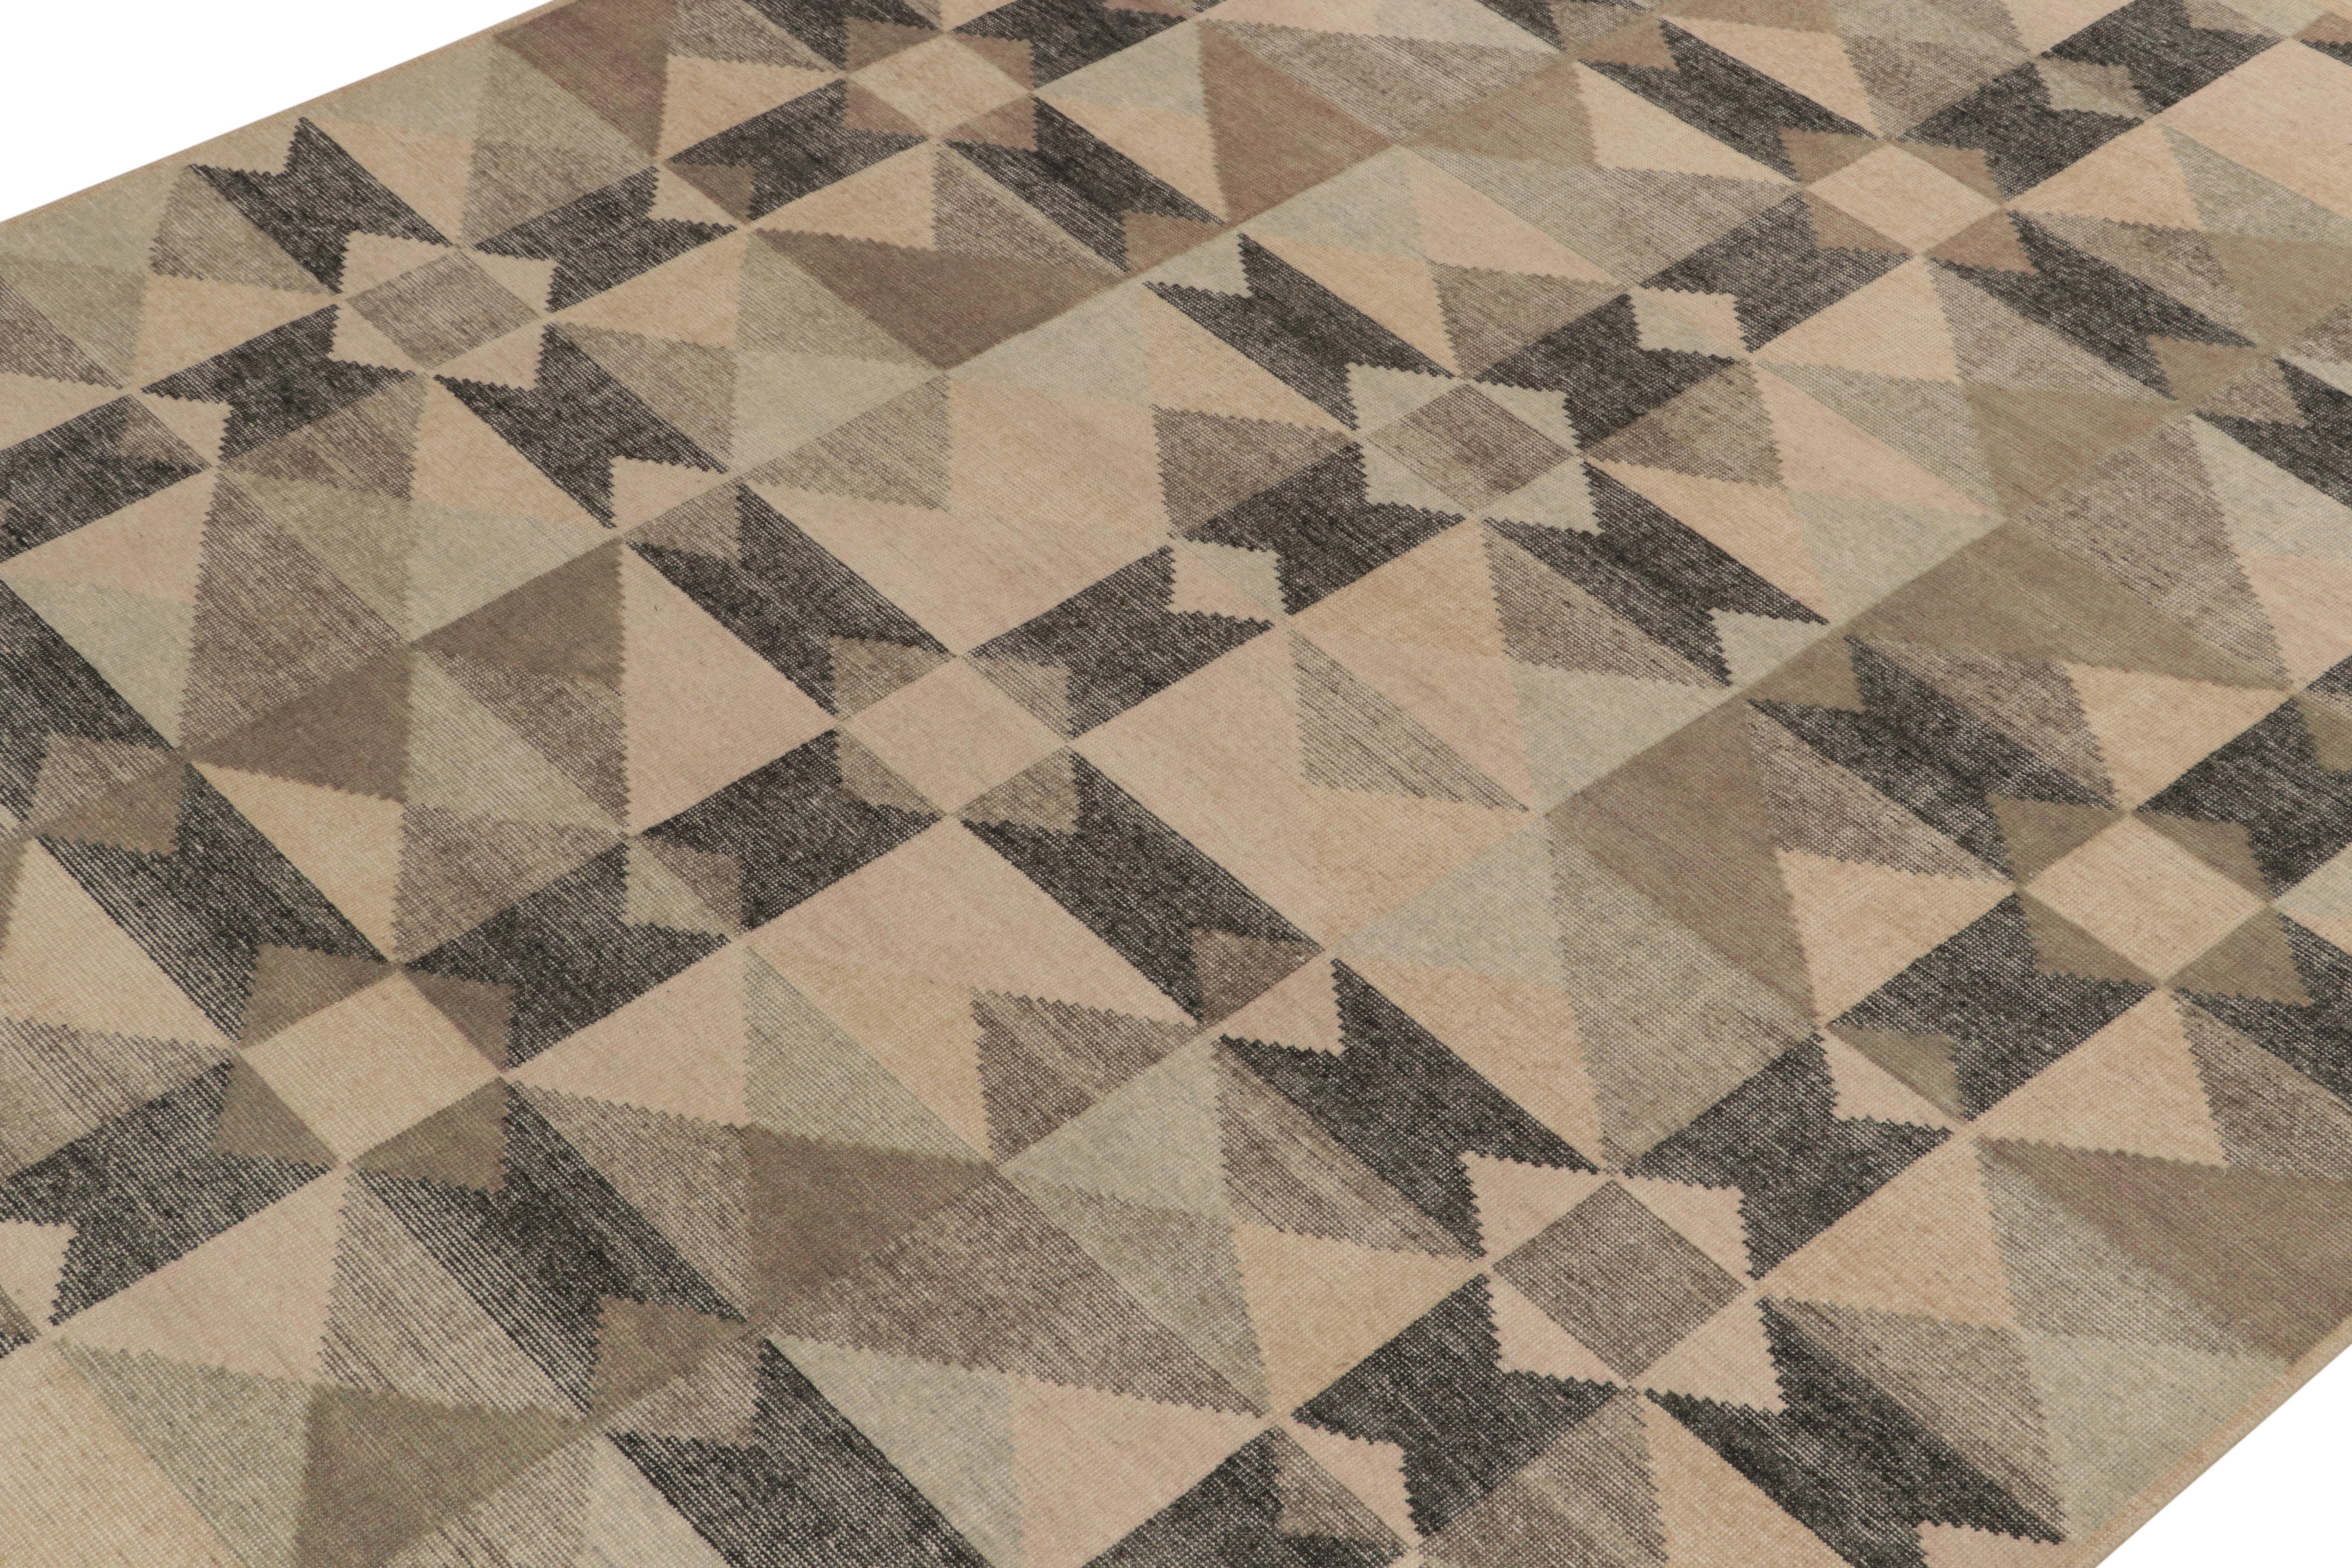 Indian Rug & Kilim's Distressed Style Deco Rug in Beige-Brown, Black Geometric Pattern For Sale